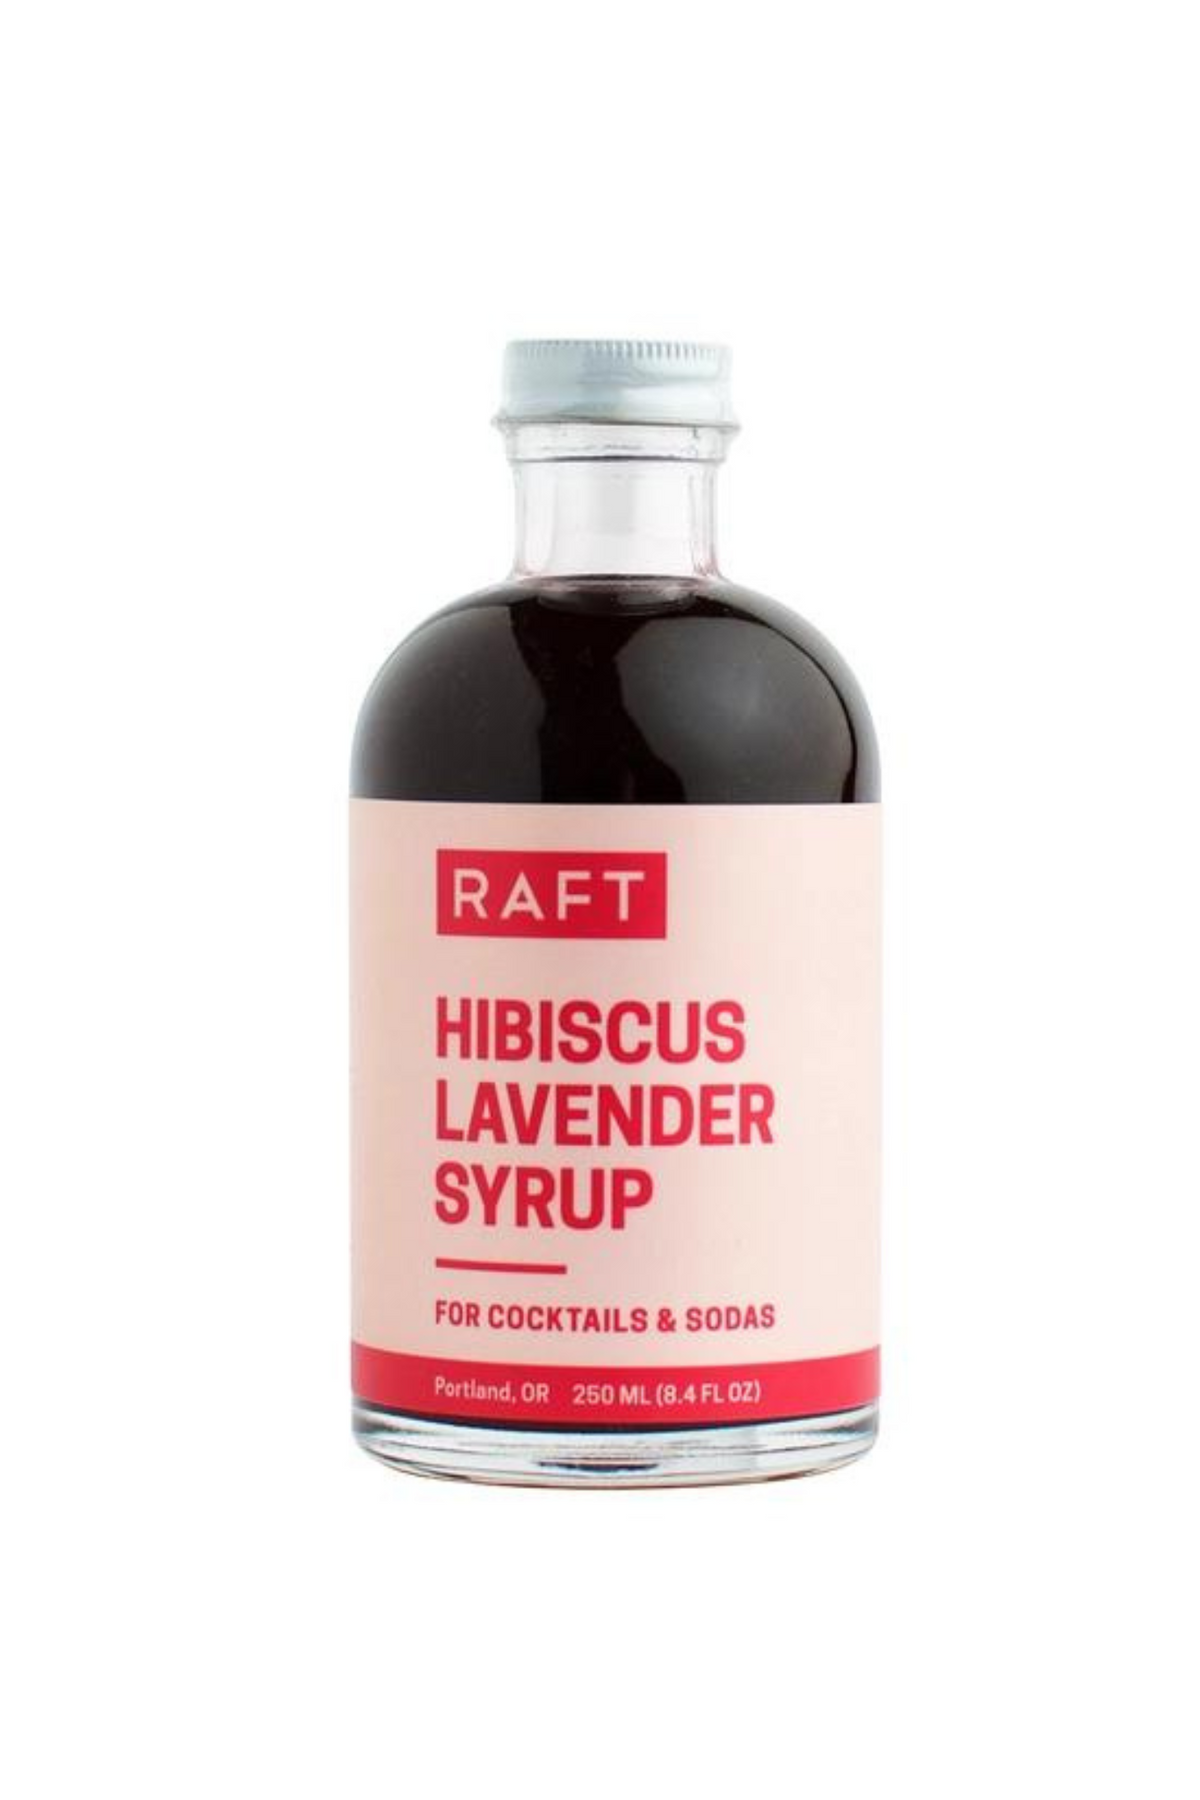 RAFT Hibiscus Lavender Syrup